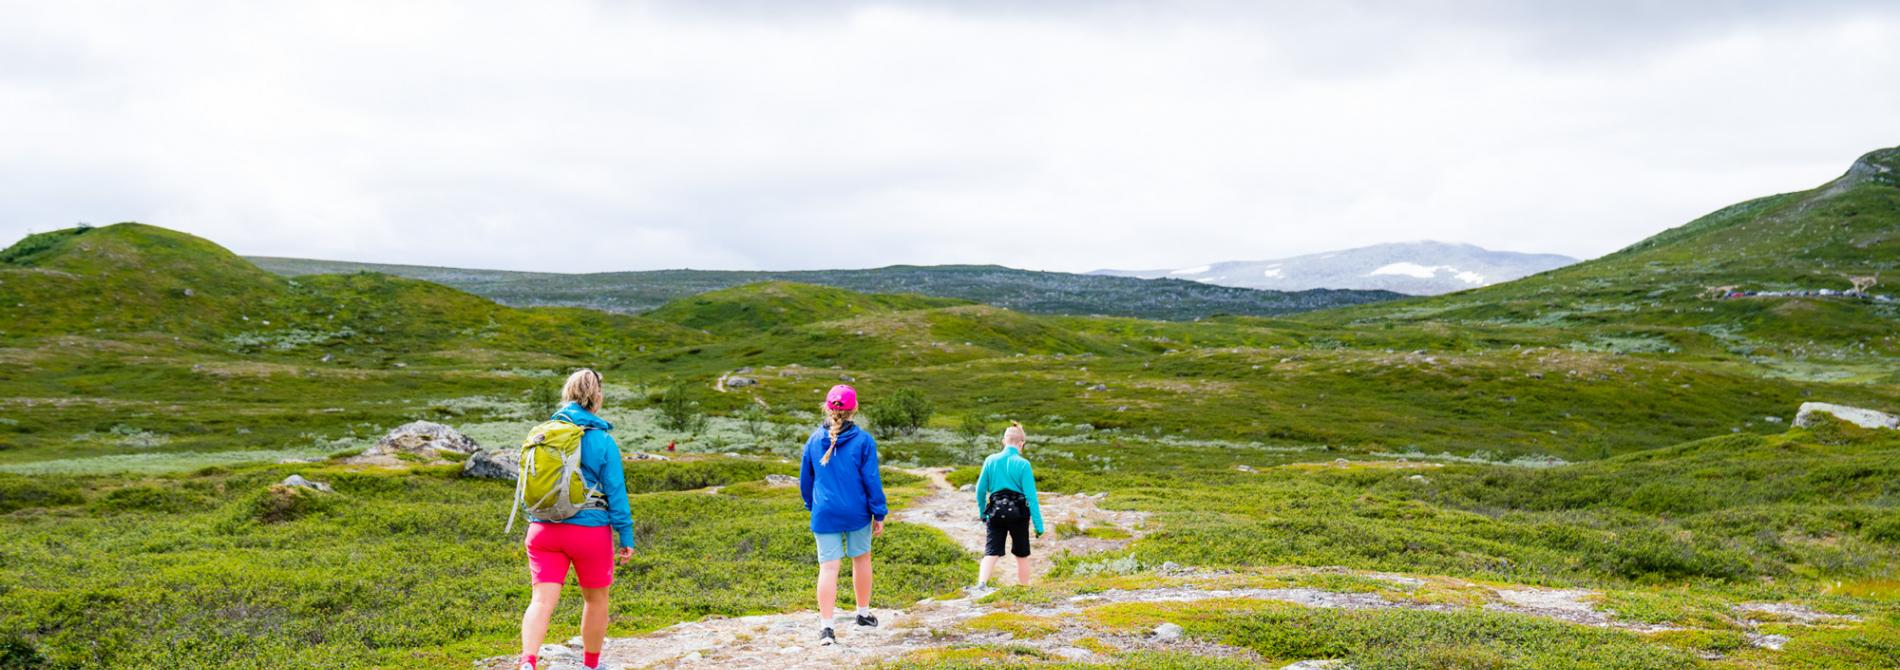 Mountain hiking - Hike in Funäs mountains